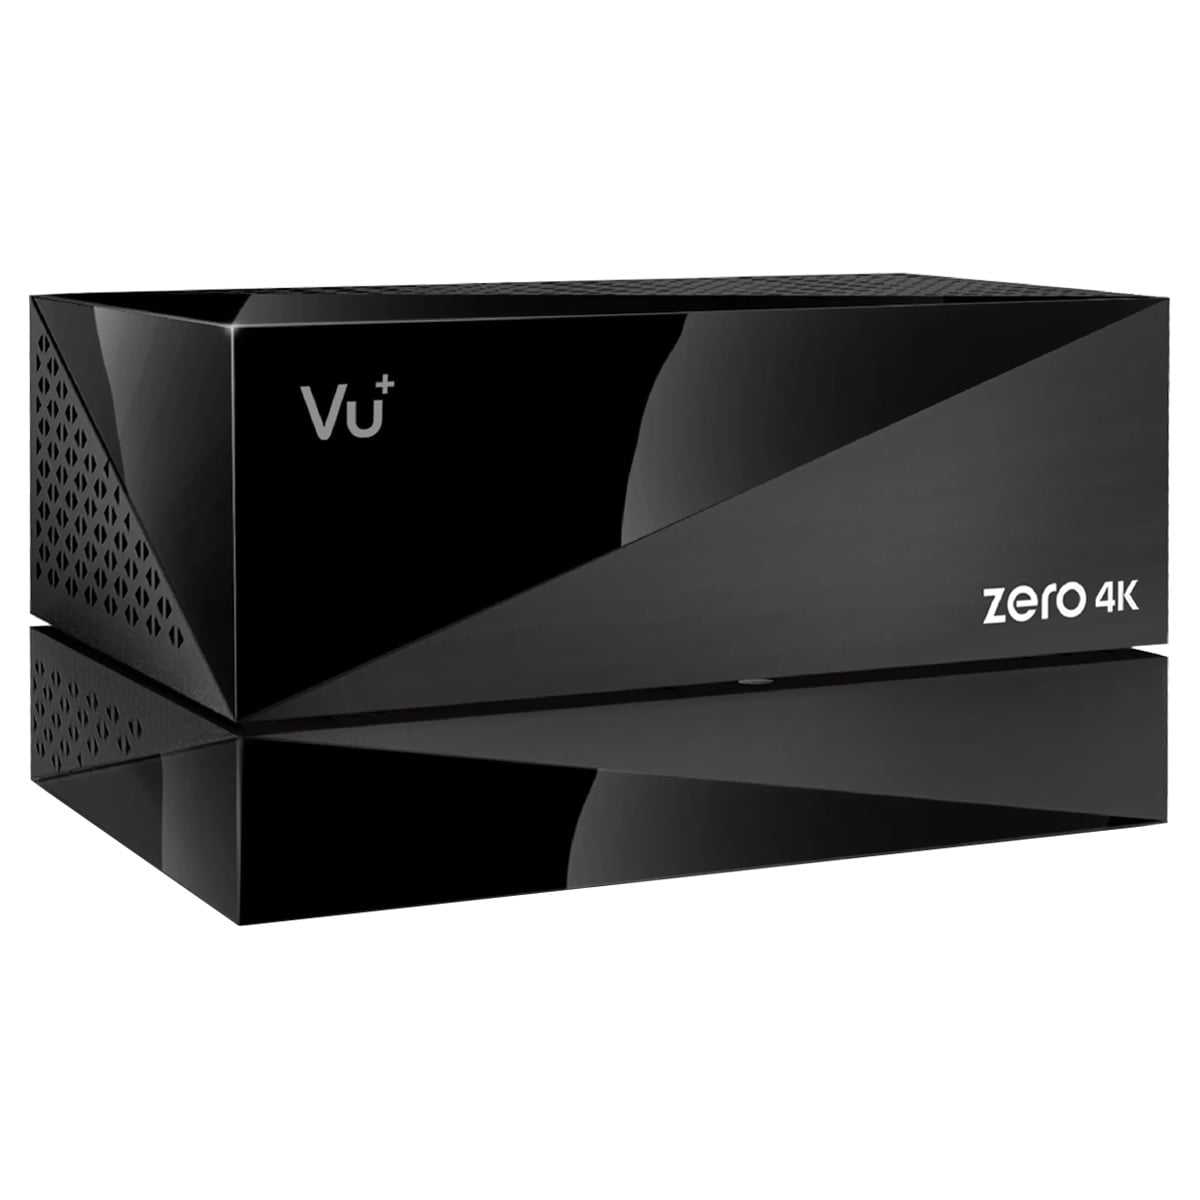 VU+ Plus Zero 4K DVB-C/T2 Kabel Receiver inkl. PVR-Kit (UHD Linux HbbTV LAN) 4TB von VU+